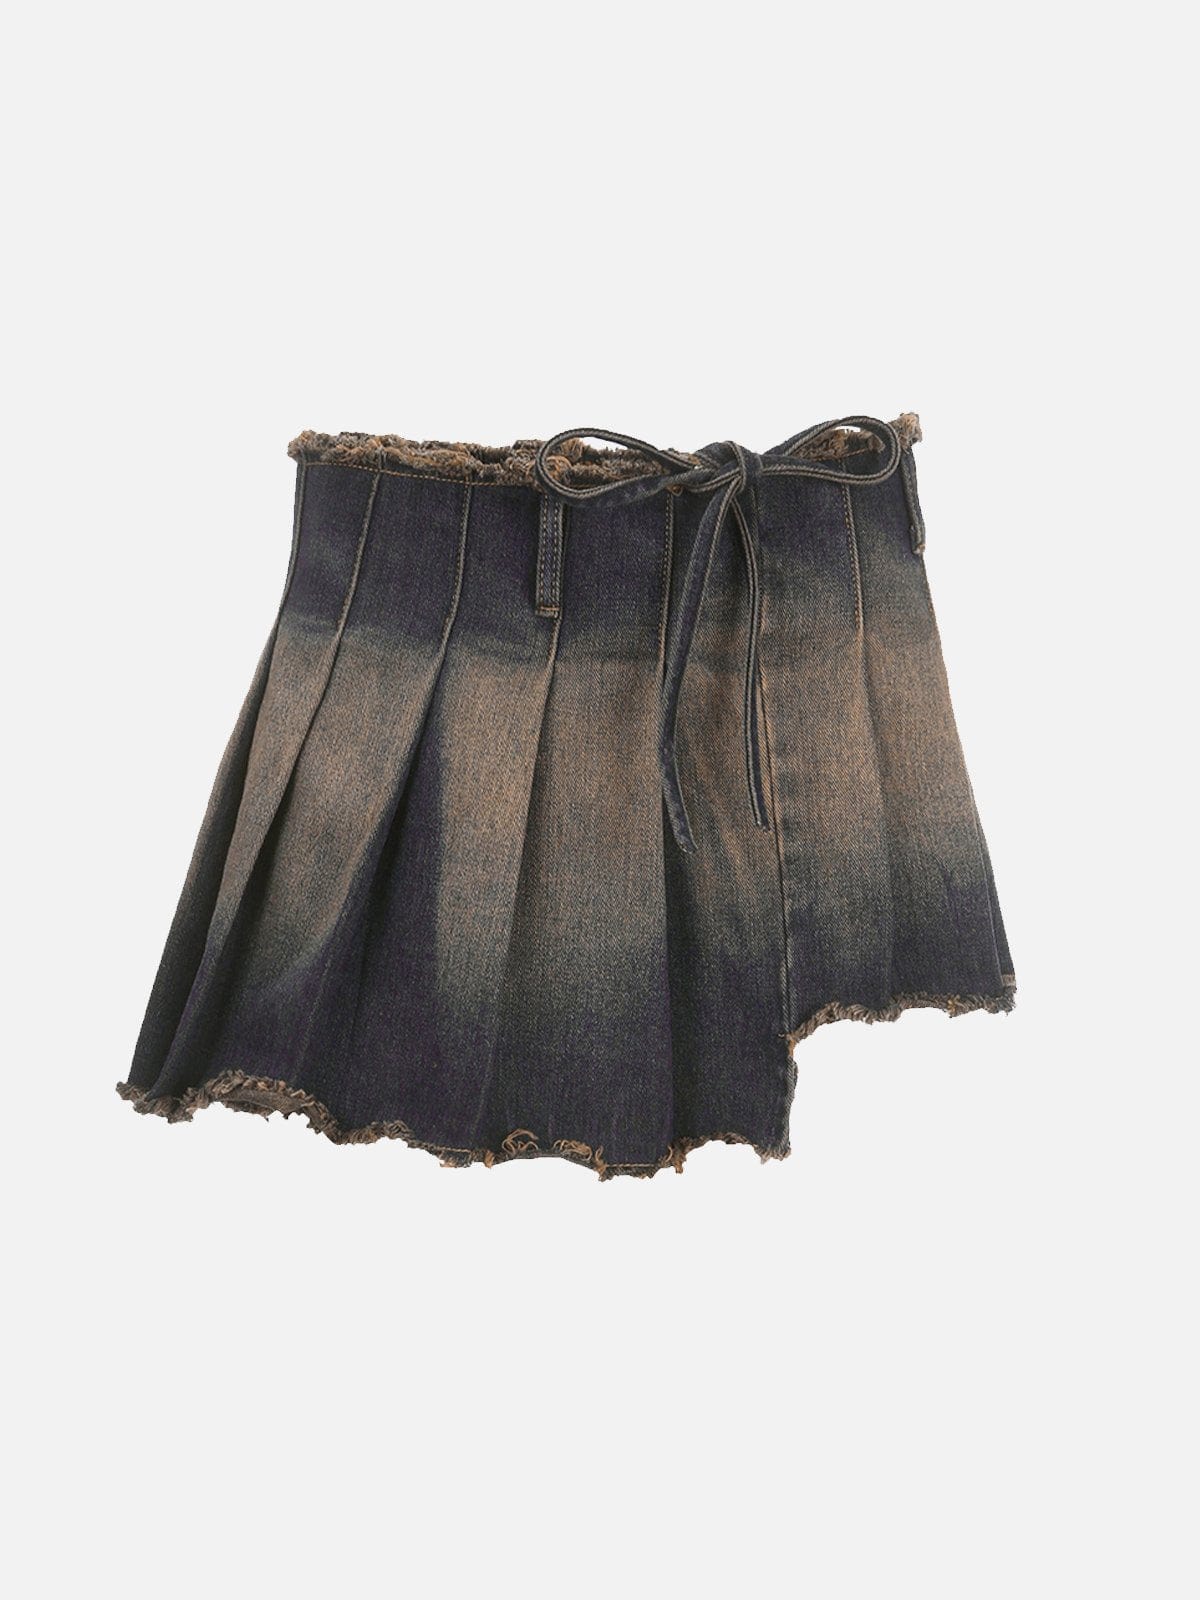 NEV Washed Tie-Dye Irregular Skirt